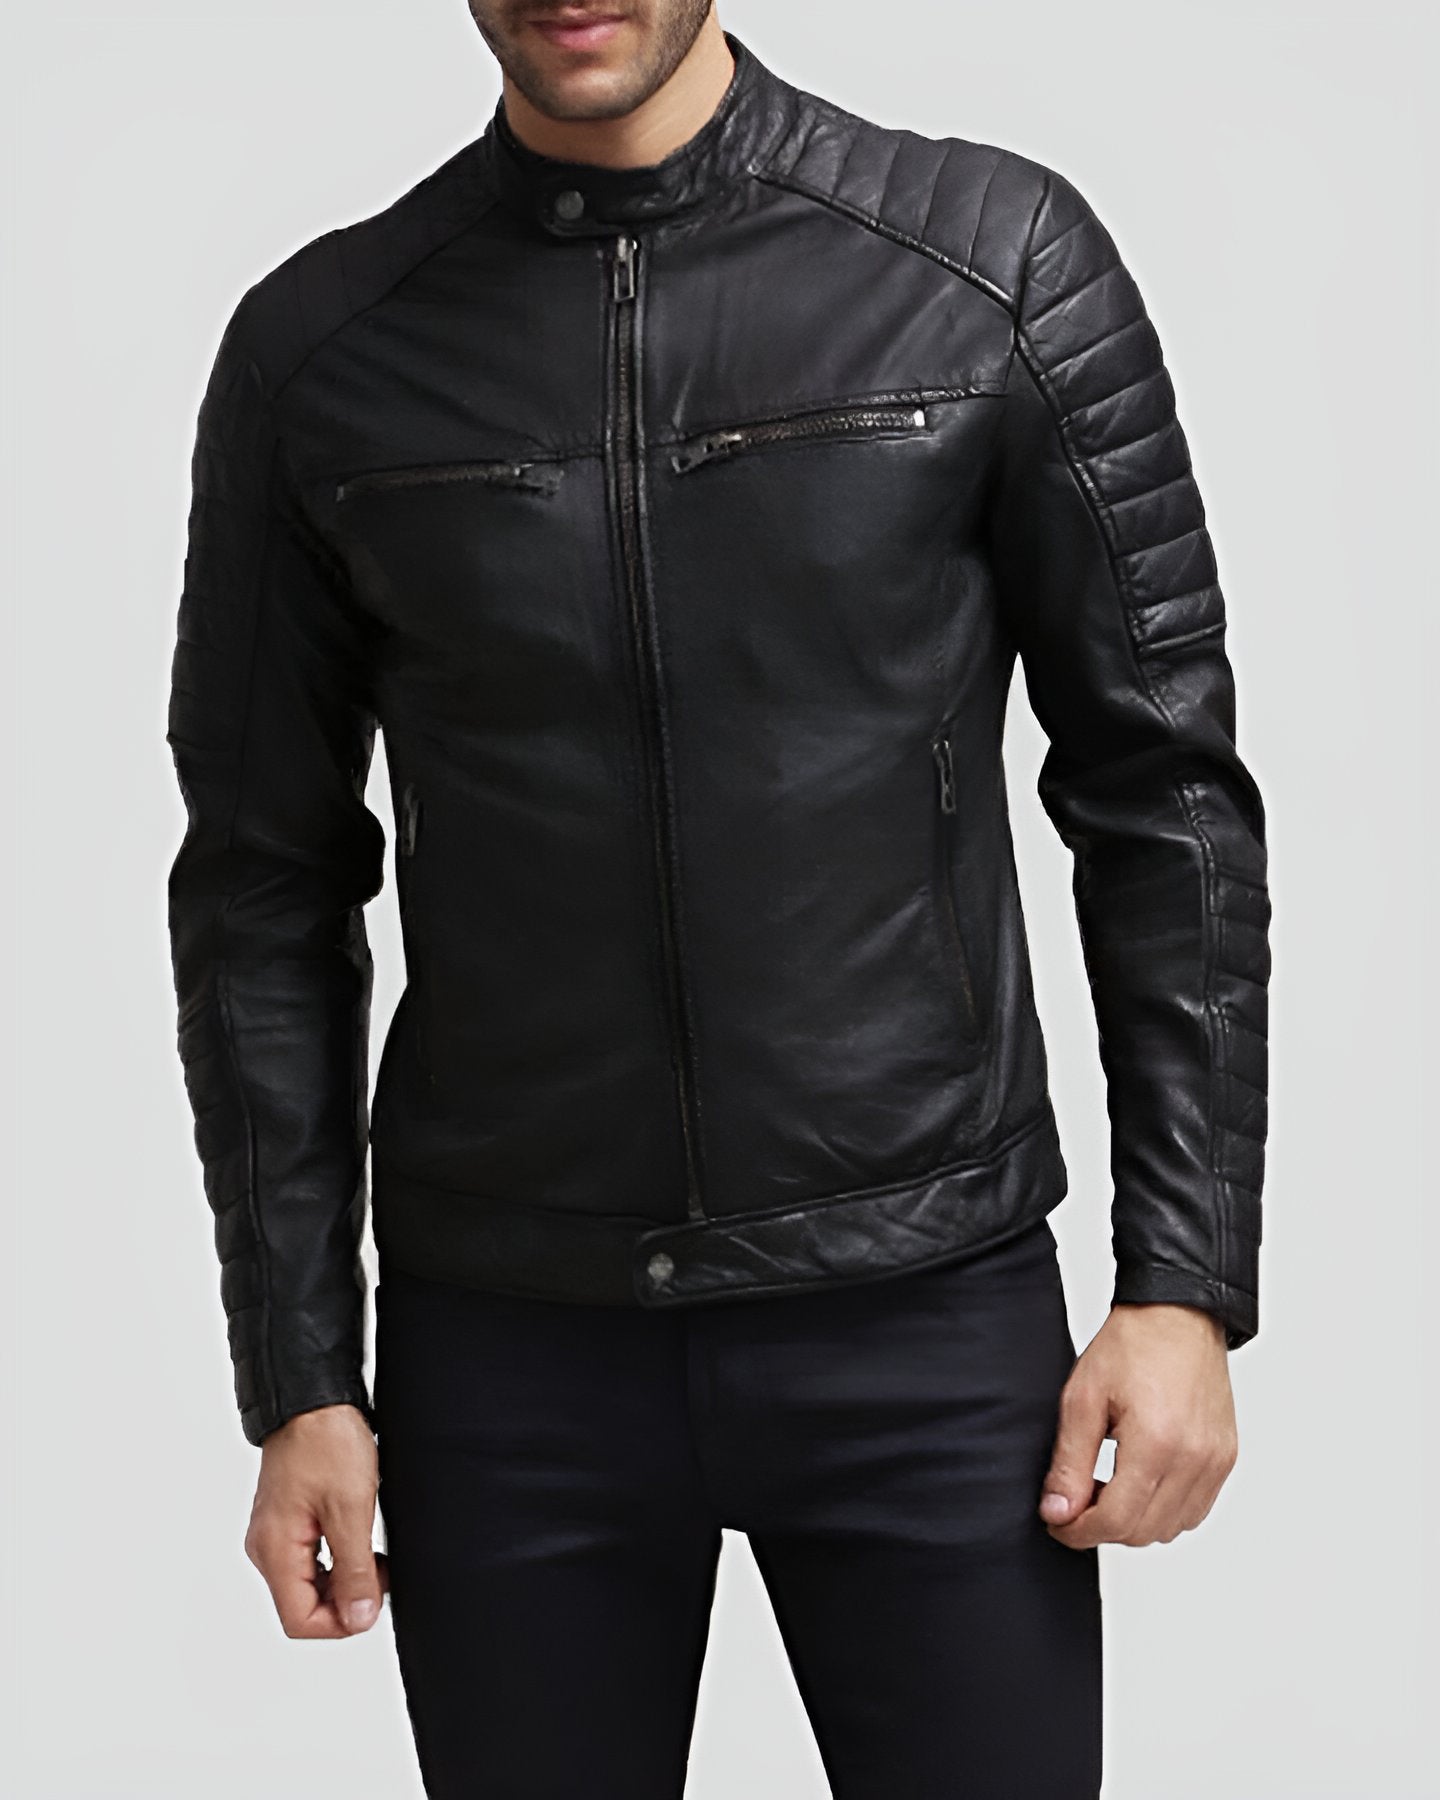 Men's Business Casual Full Zip Lightweight Jacket Outwear Military Jackets  Warm | eBay